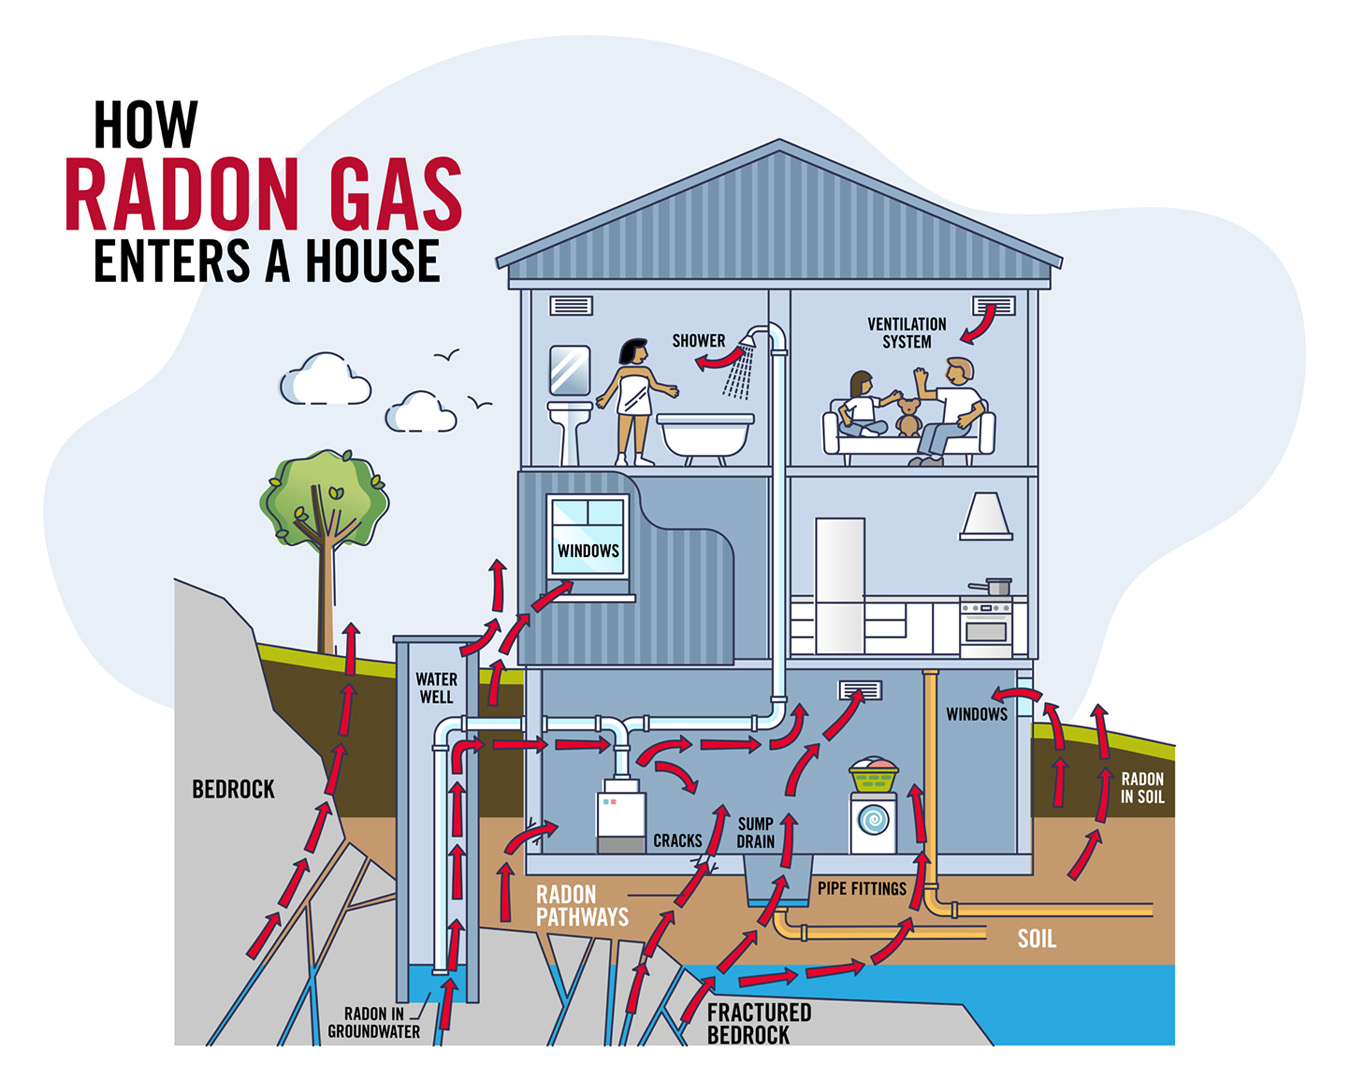 Radon can enter homes in multiple ways